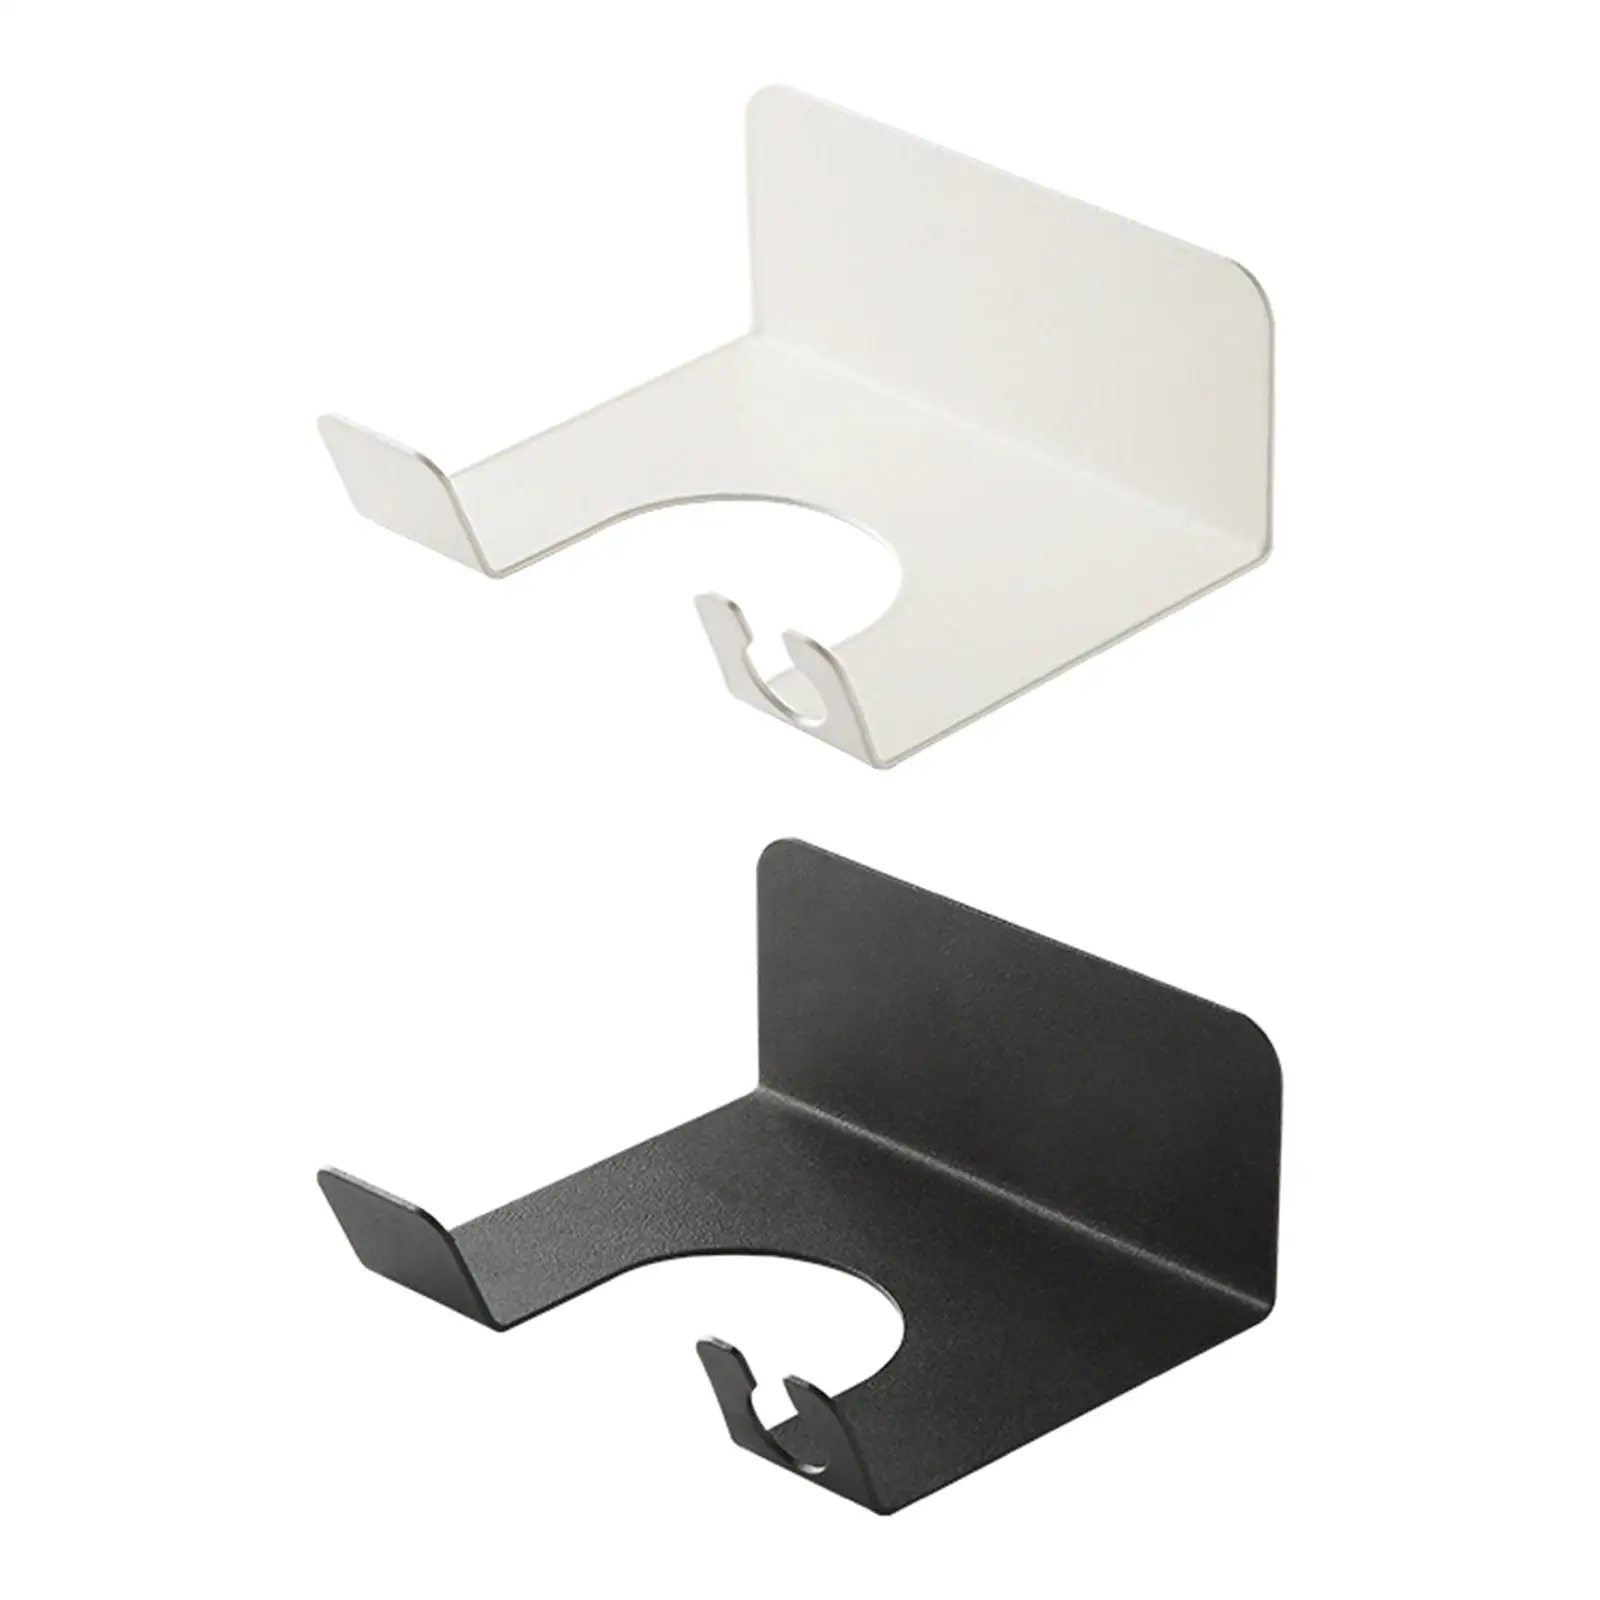 Holder Free Of Punch Stable Durable Steel Bracket Storage Rack For Bathroom Hotel Straightener Flat Iron